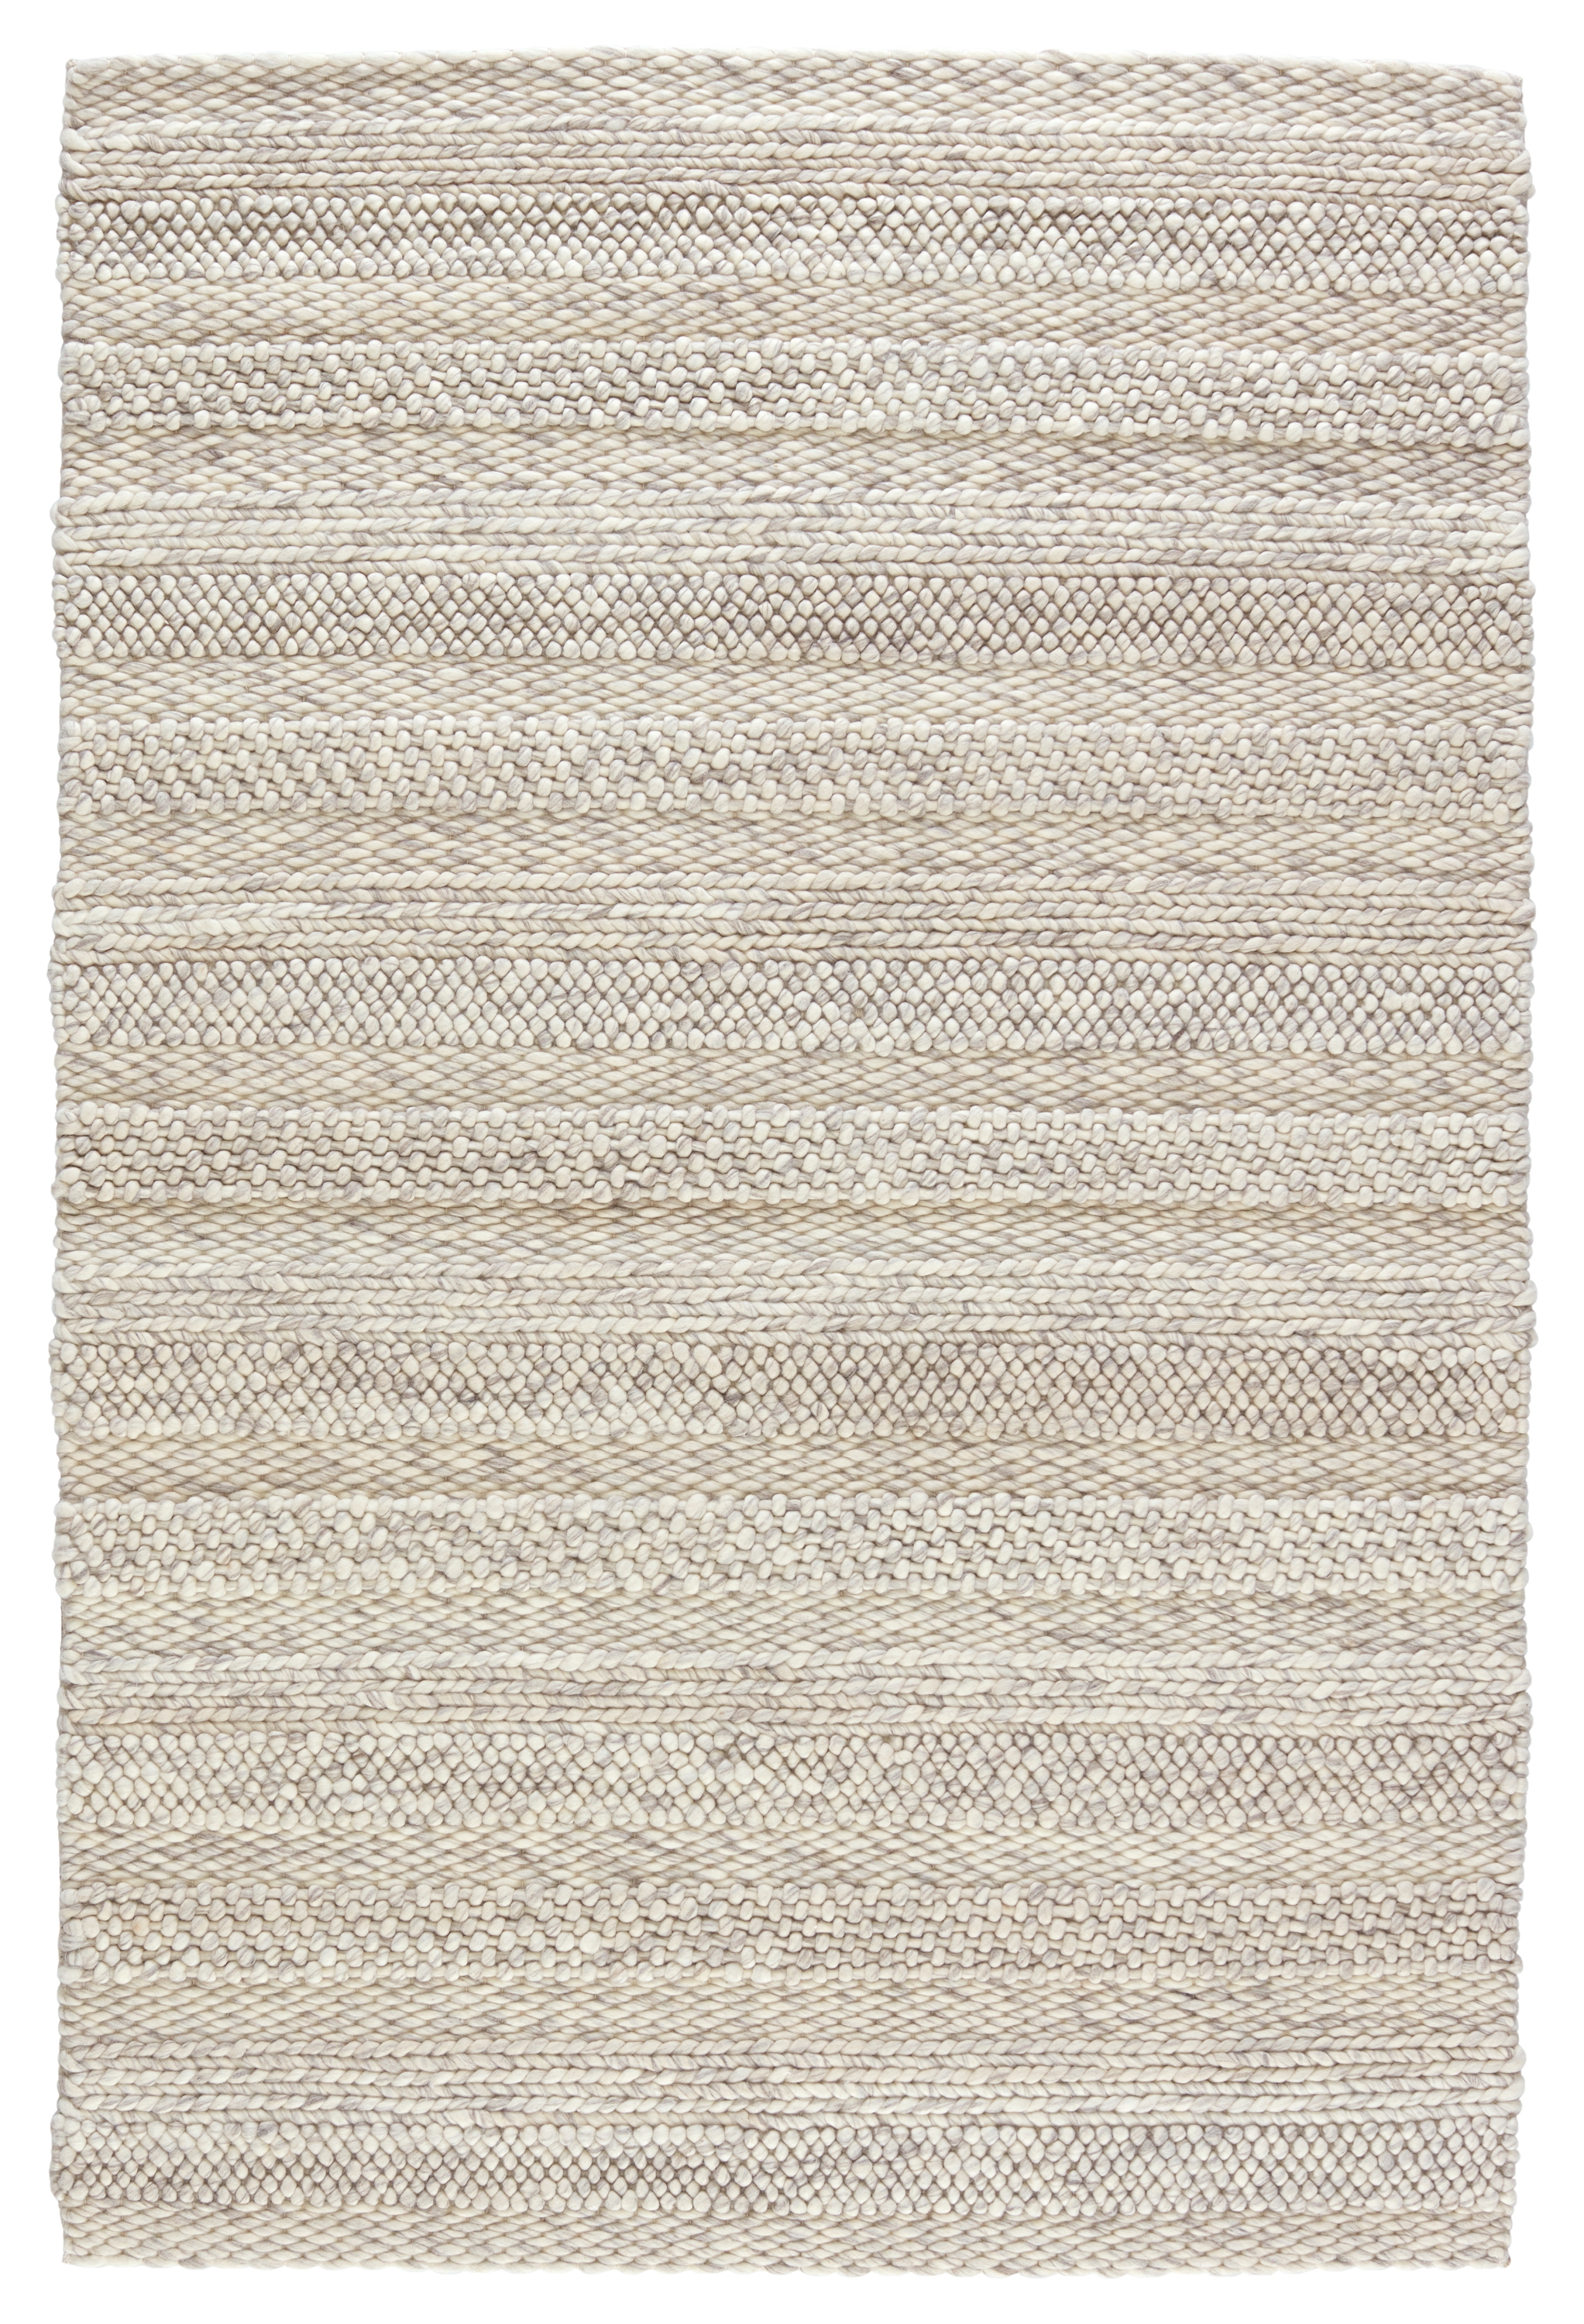 Lagom Handmade Solid Ivory/ Light Gray Area Rug (8'X10') - Image 0